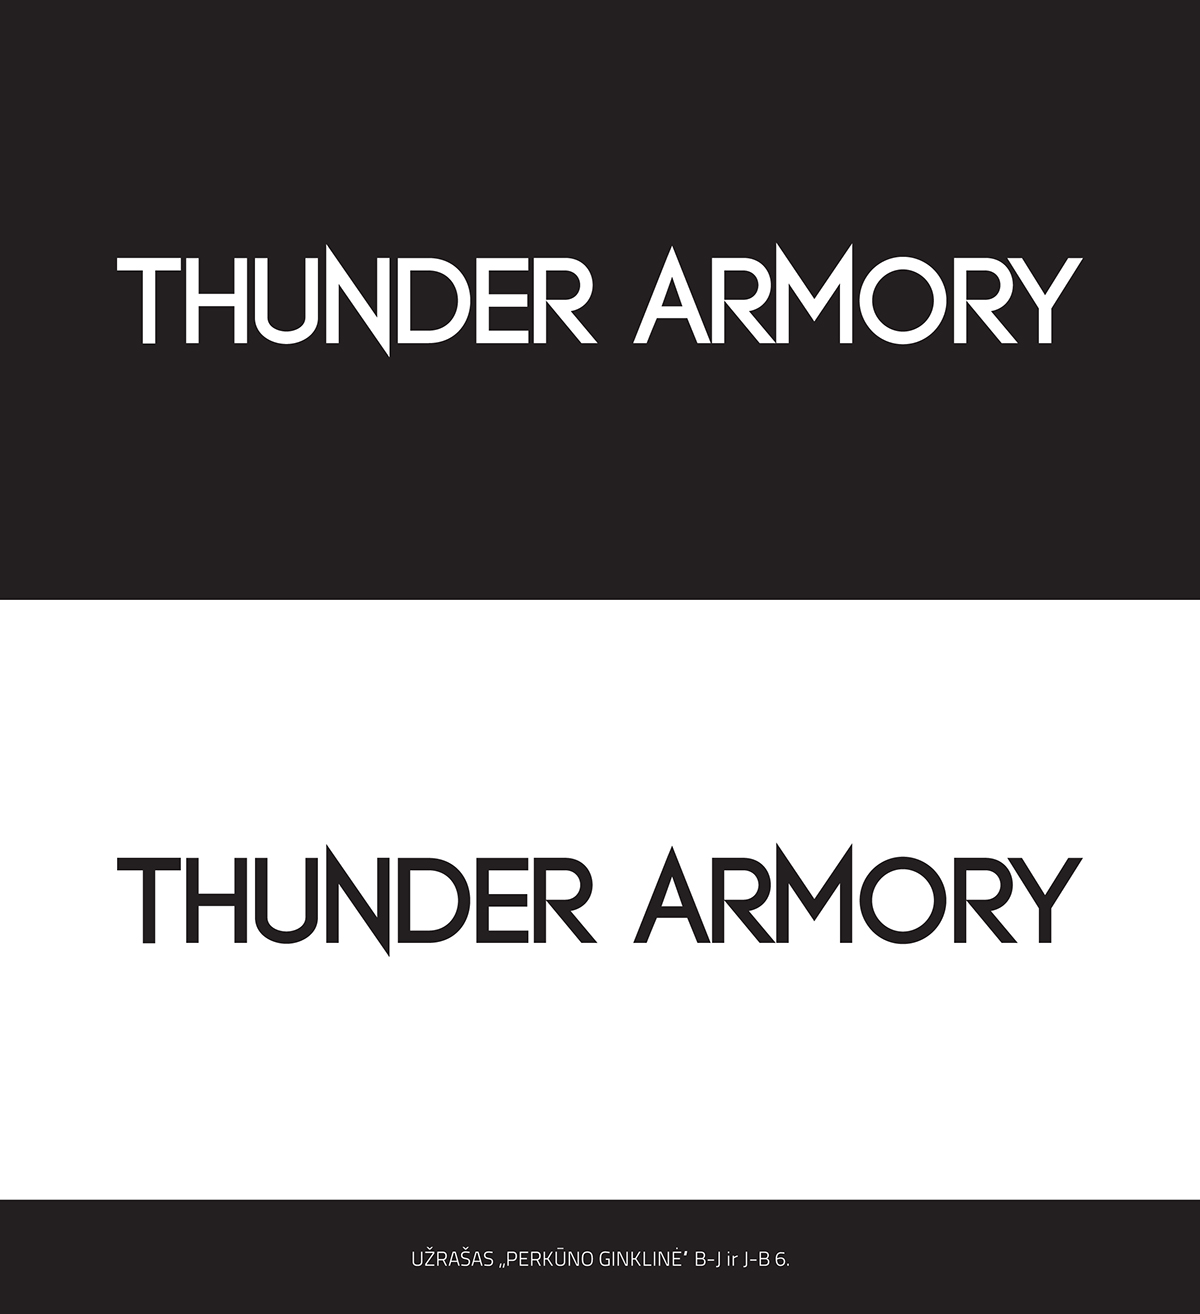 thunder  armory logo tactical Gun guns Military Custom AR15 carbine Weapon